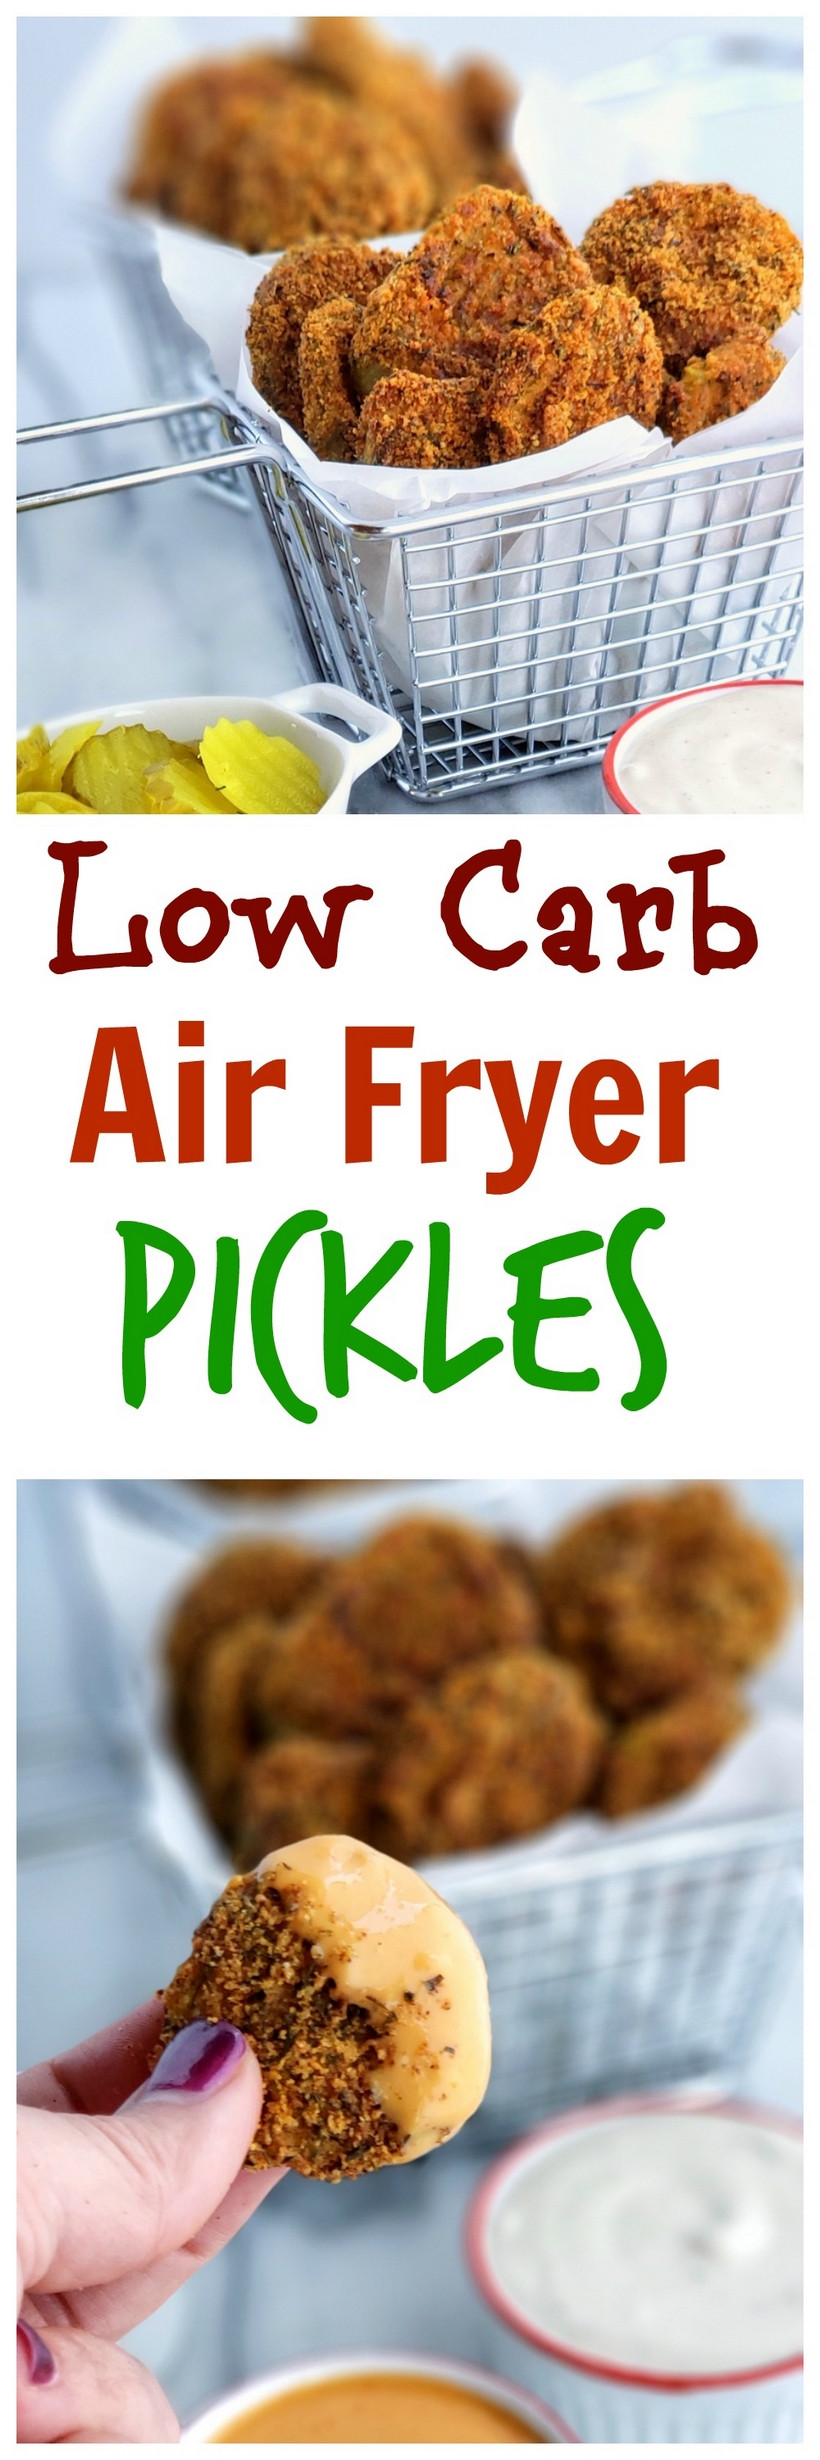 Low Carb Air Fryer Recipes
 Low Carb Air Fryer Pickles VIDEO